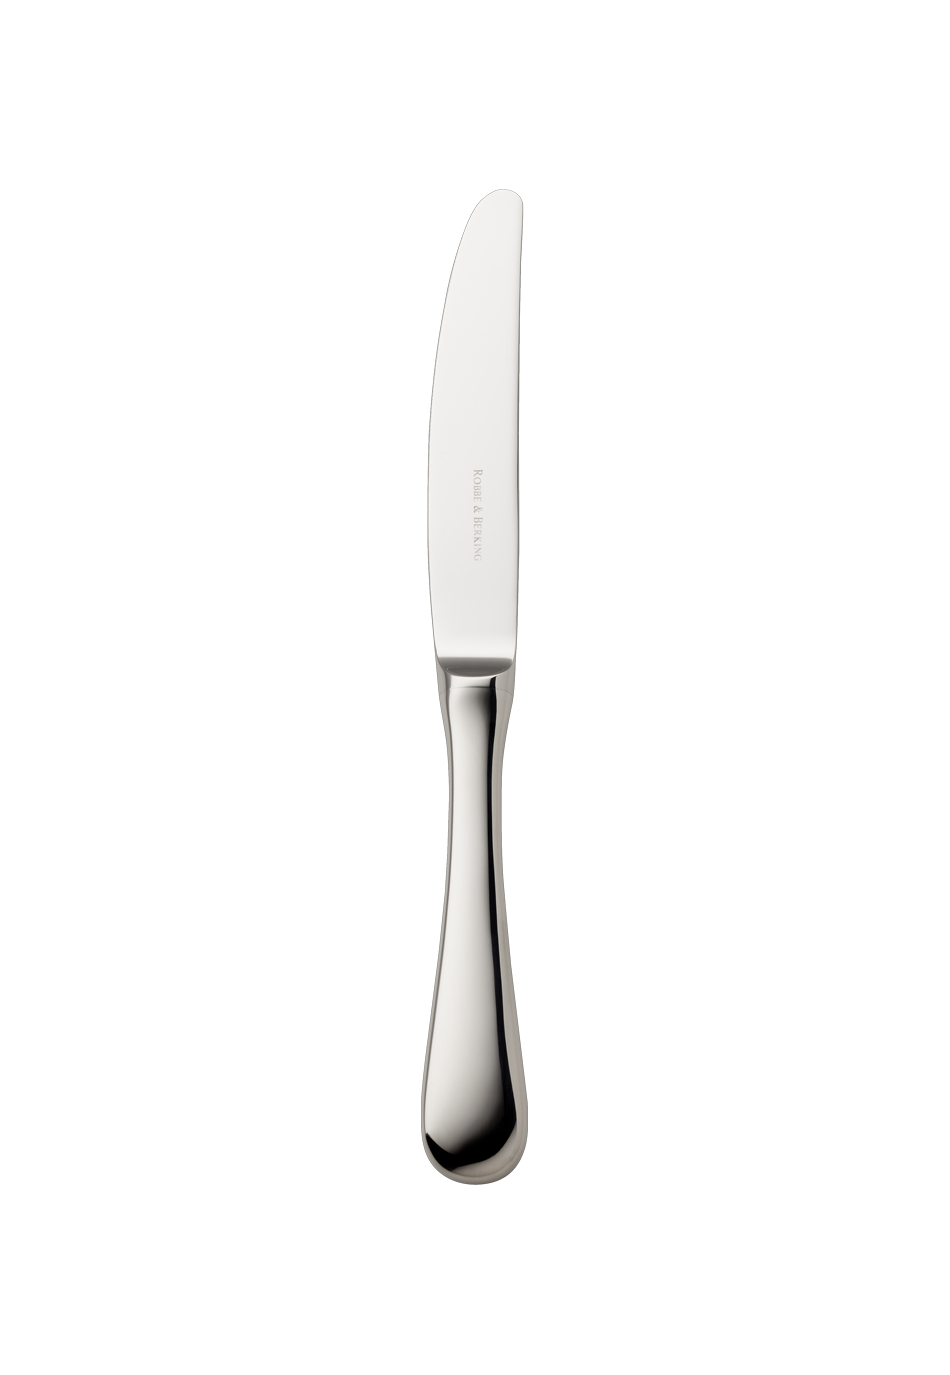 Como Menu Knife (18/8 stainless steel)